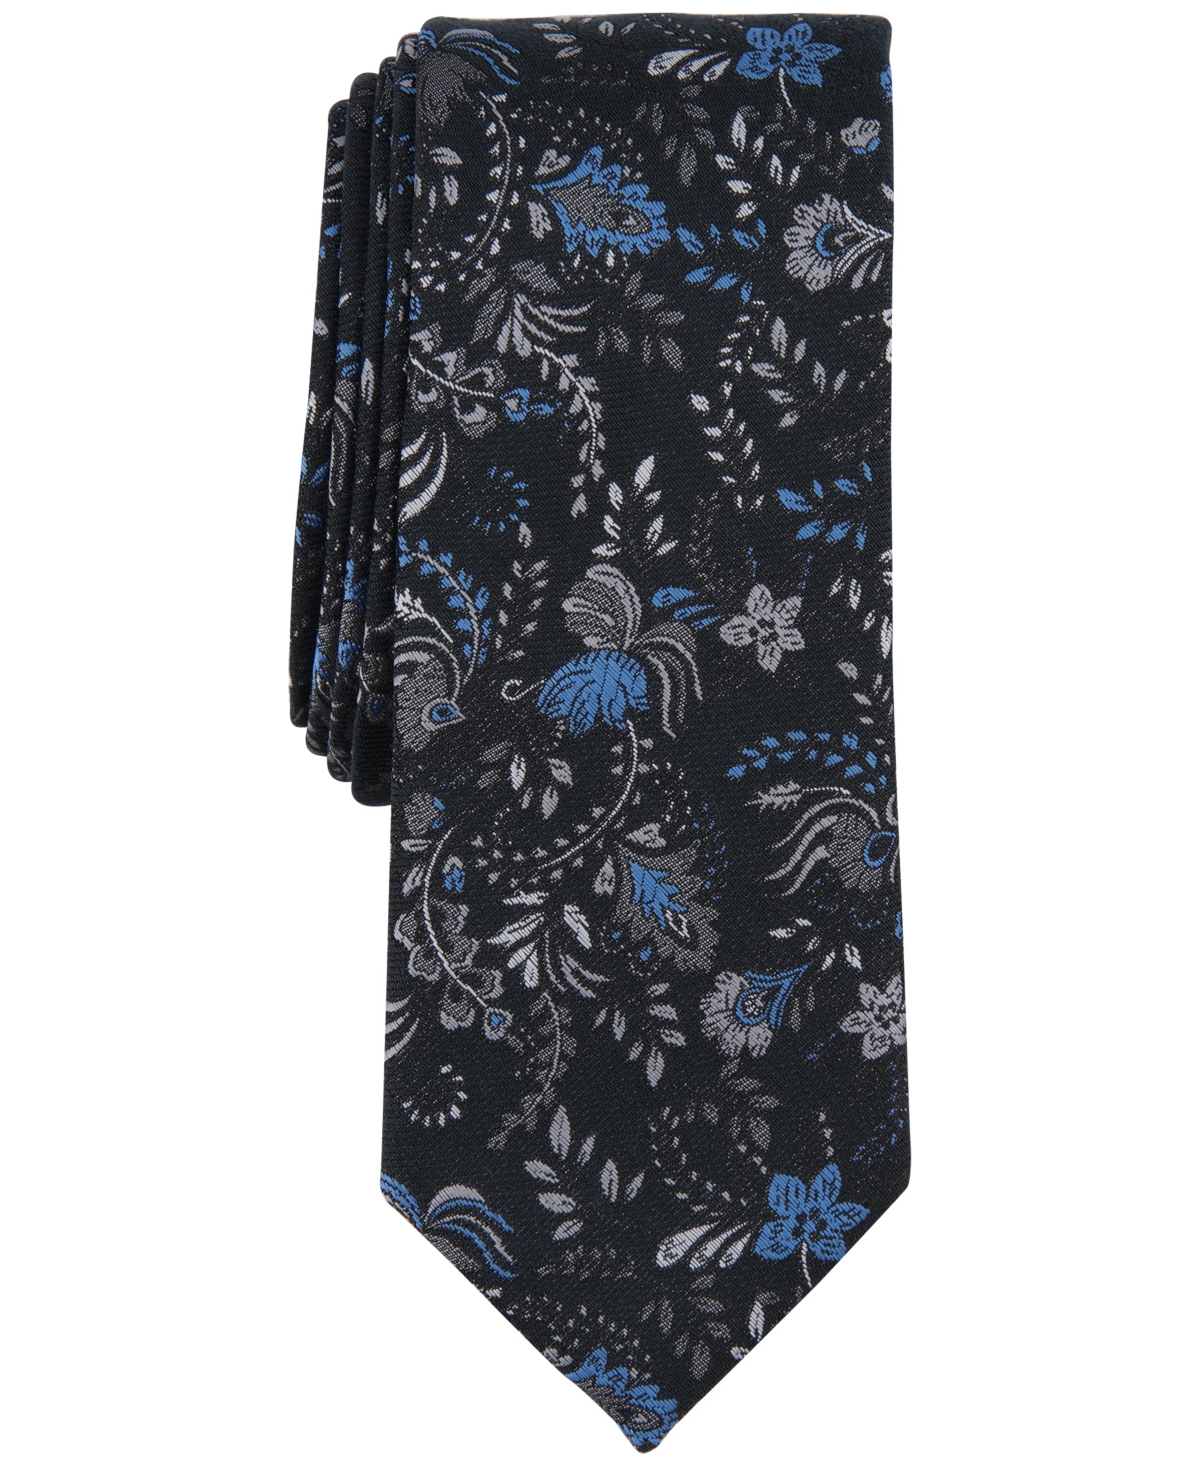 Men's Tobago Botanical Tie, Created for Macy's - Navy